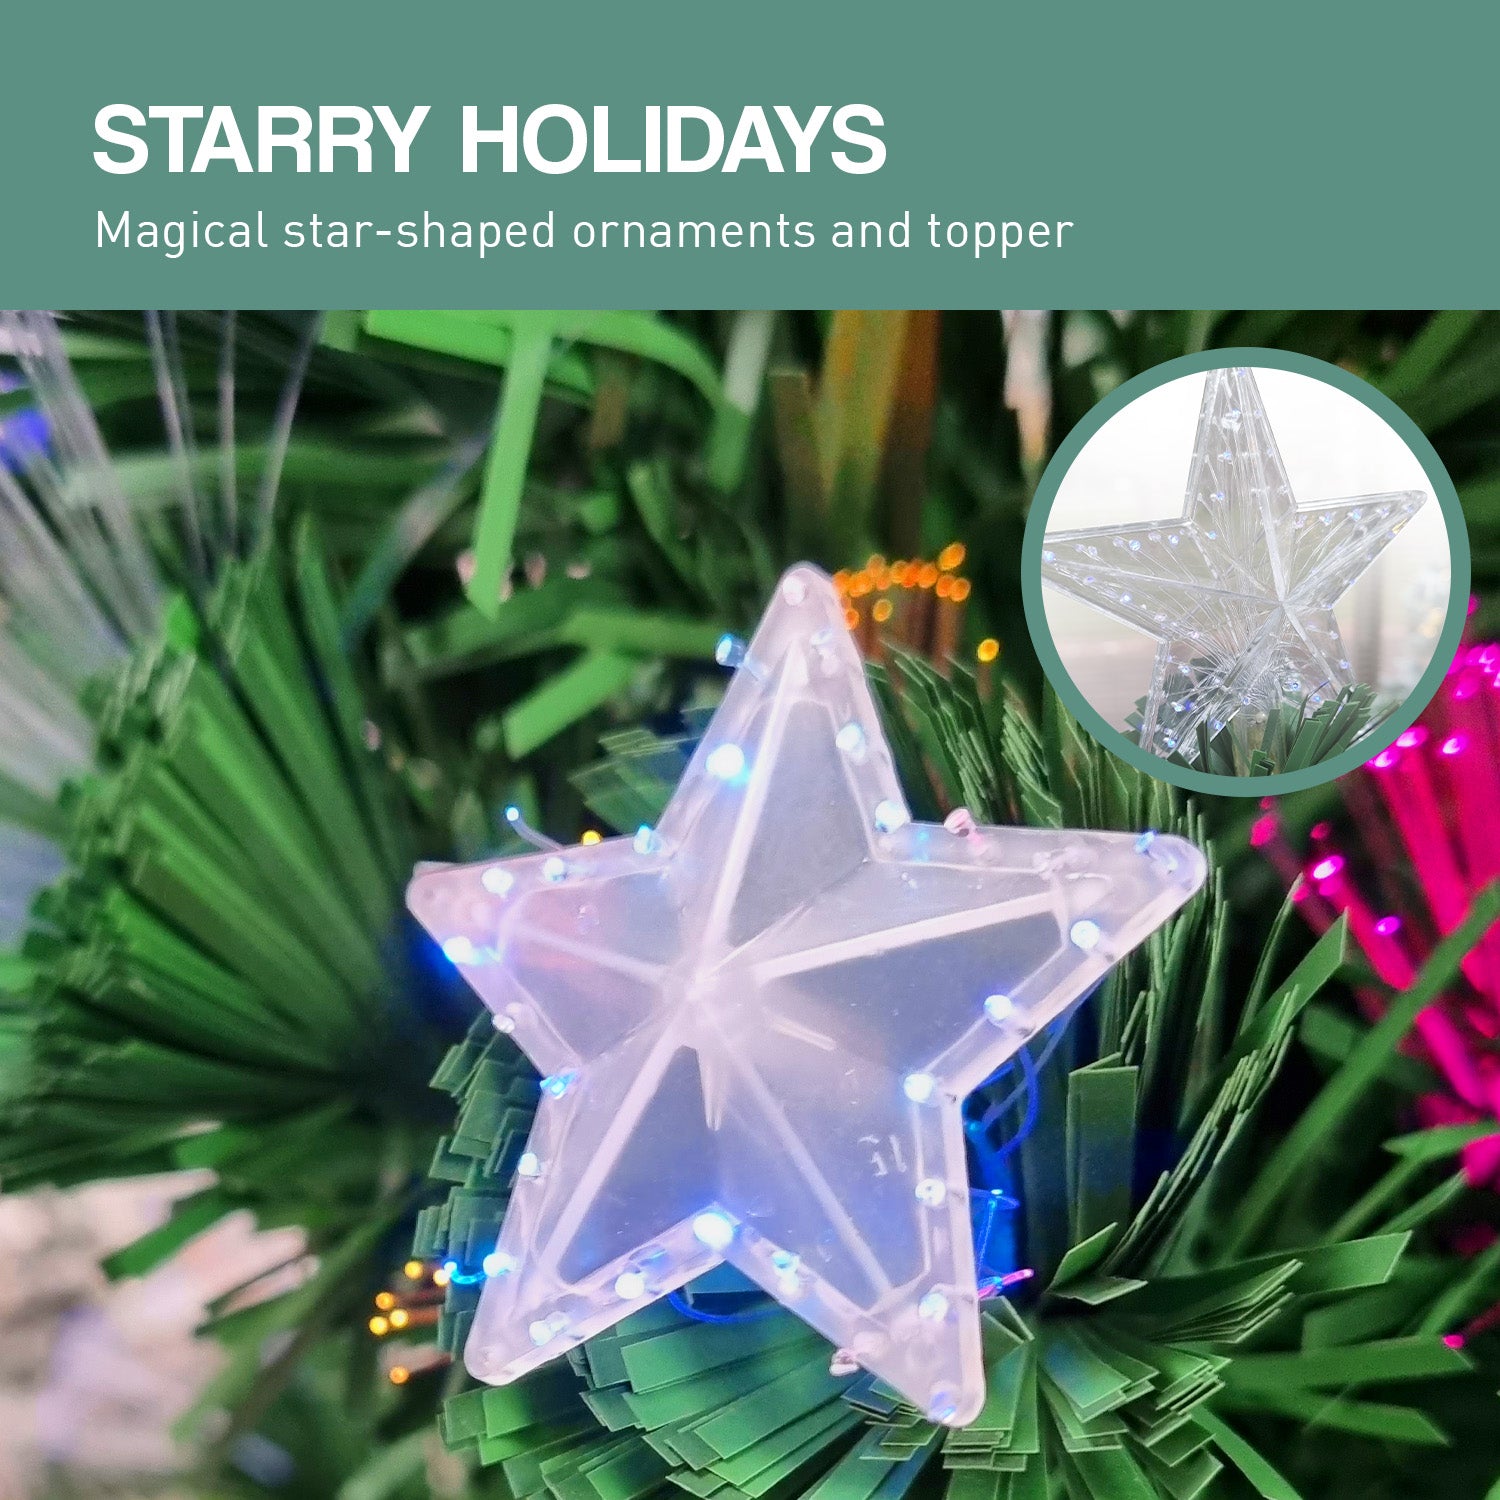 Christabelle 2.4m Enchanted Pre Lit Fibre Optic Christmas Tree Stars Xmas Decor - SILBERSHELL